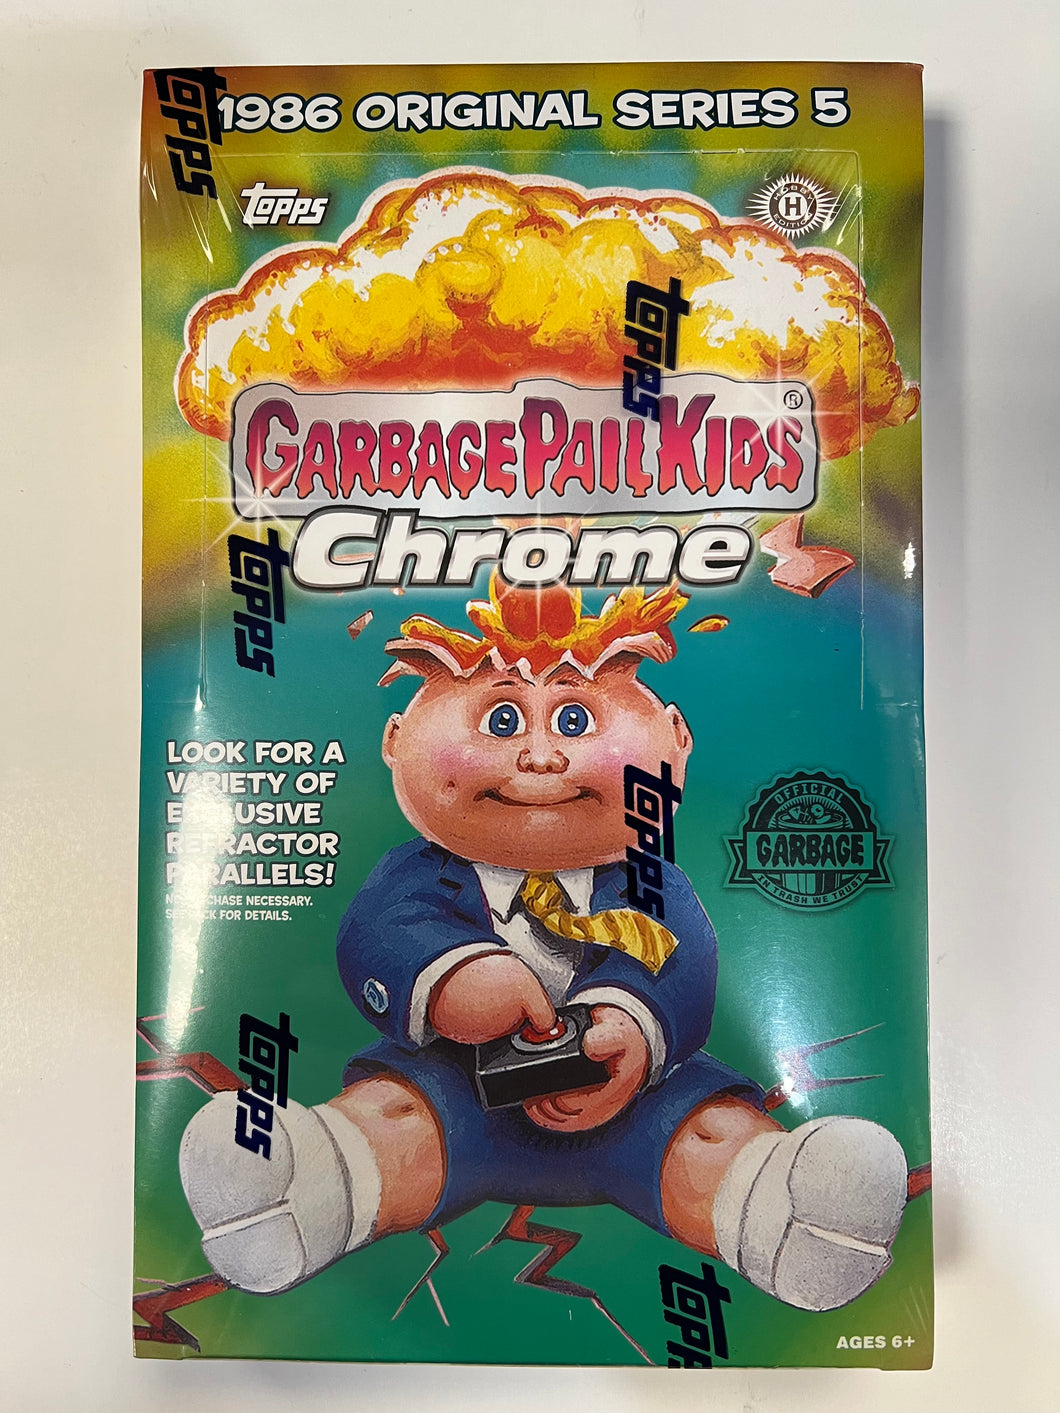 2022 Topps Chrome Garbage Pail Kids Hobby Box